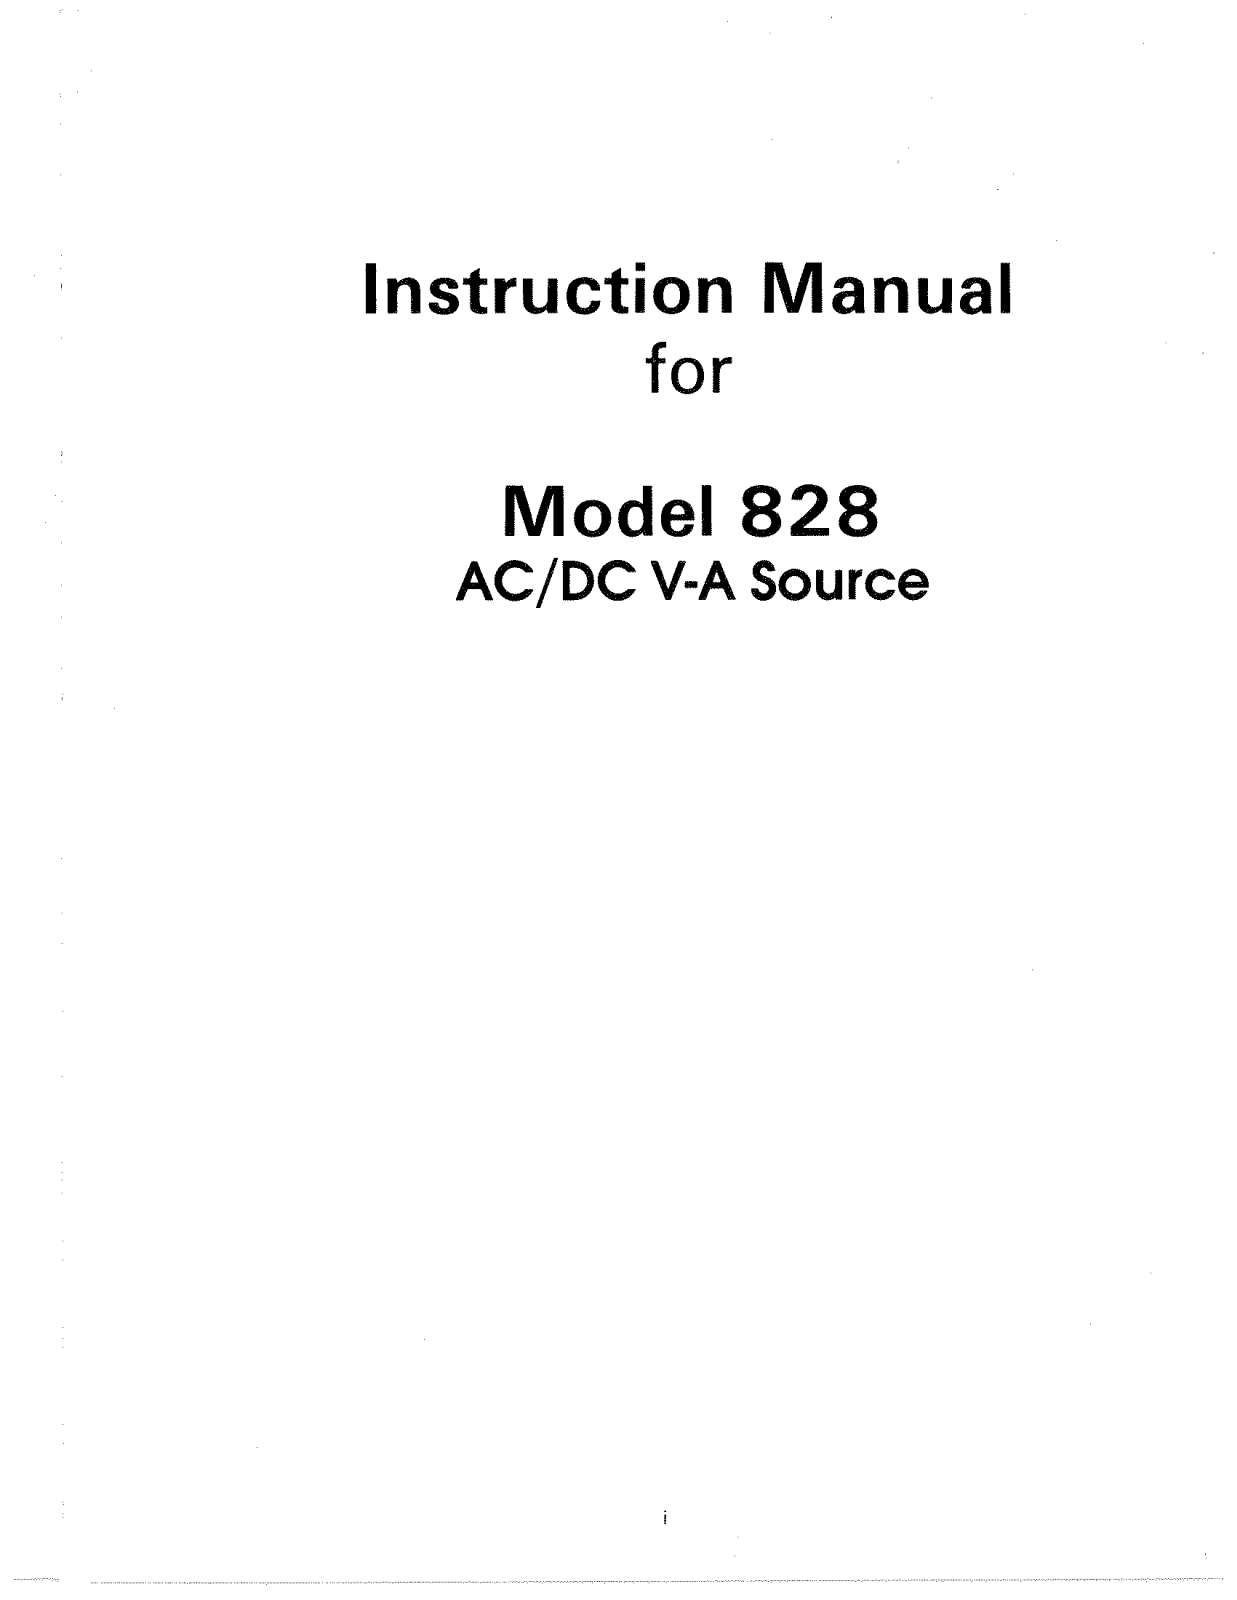 Clark Hess 828 Service manual